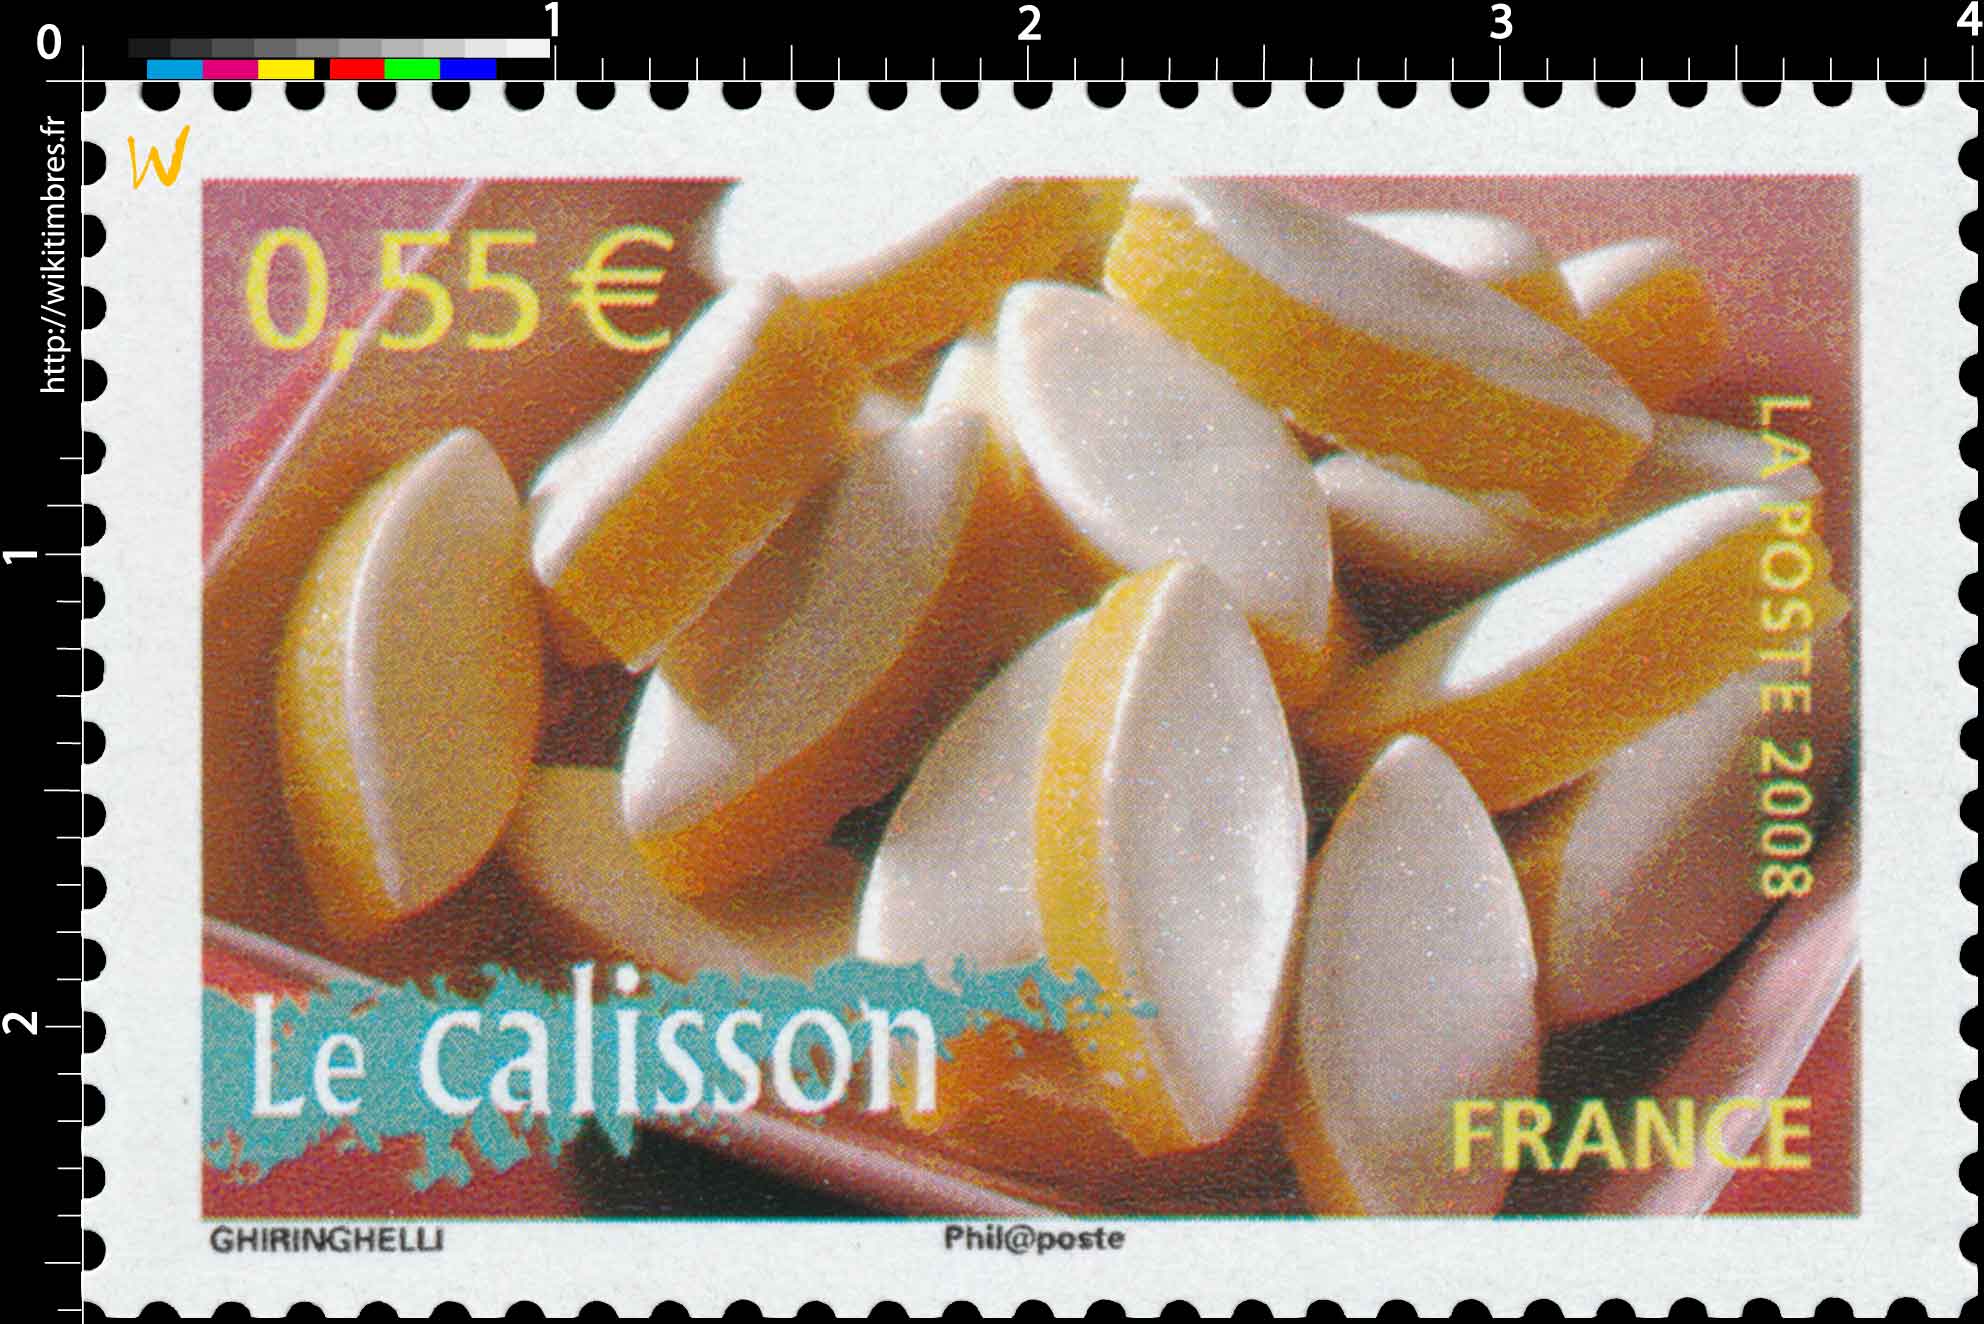 2008 Le calisson